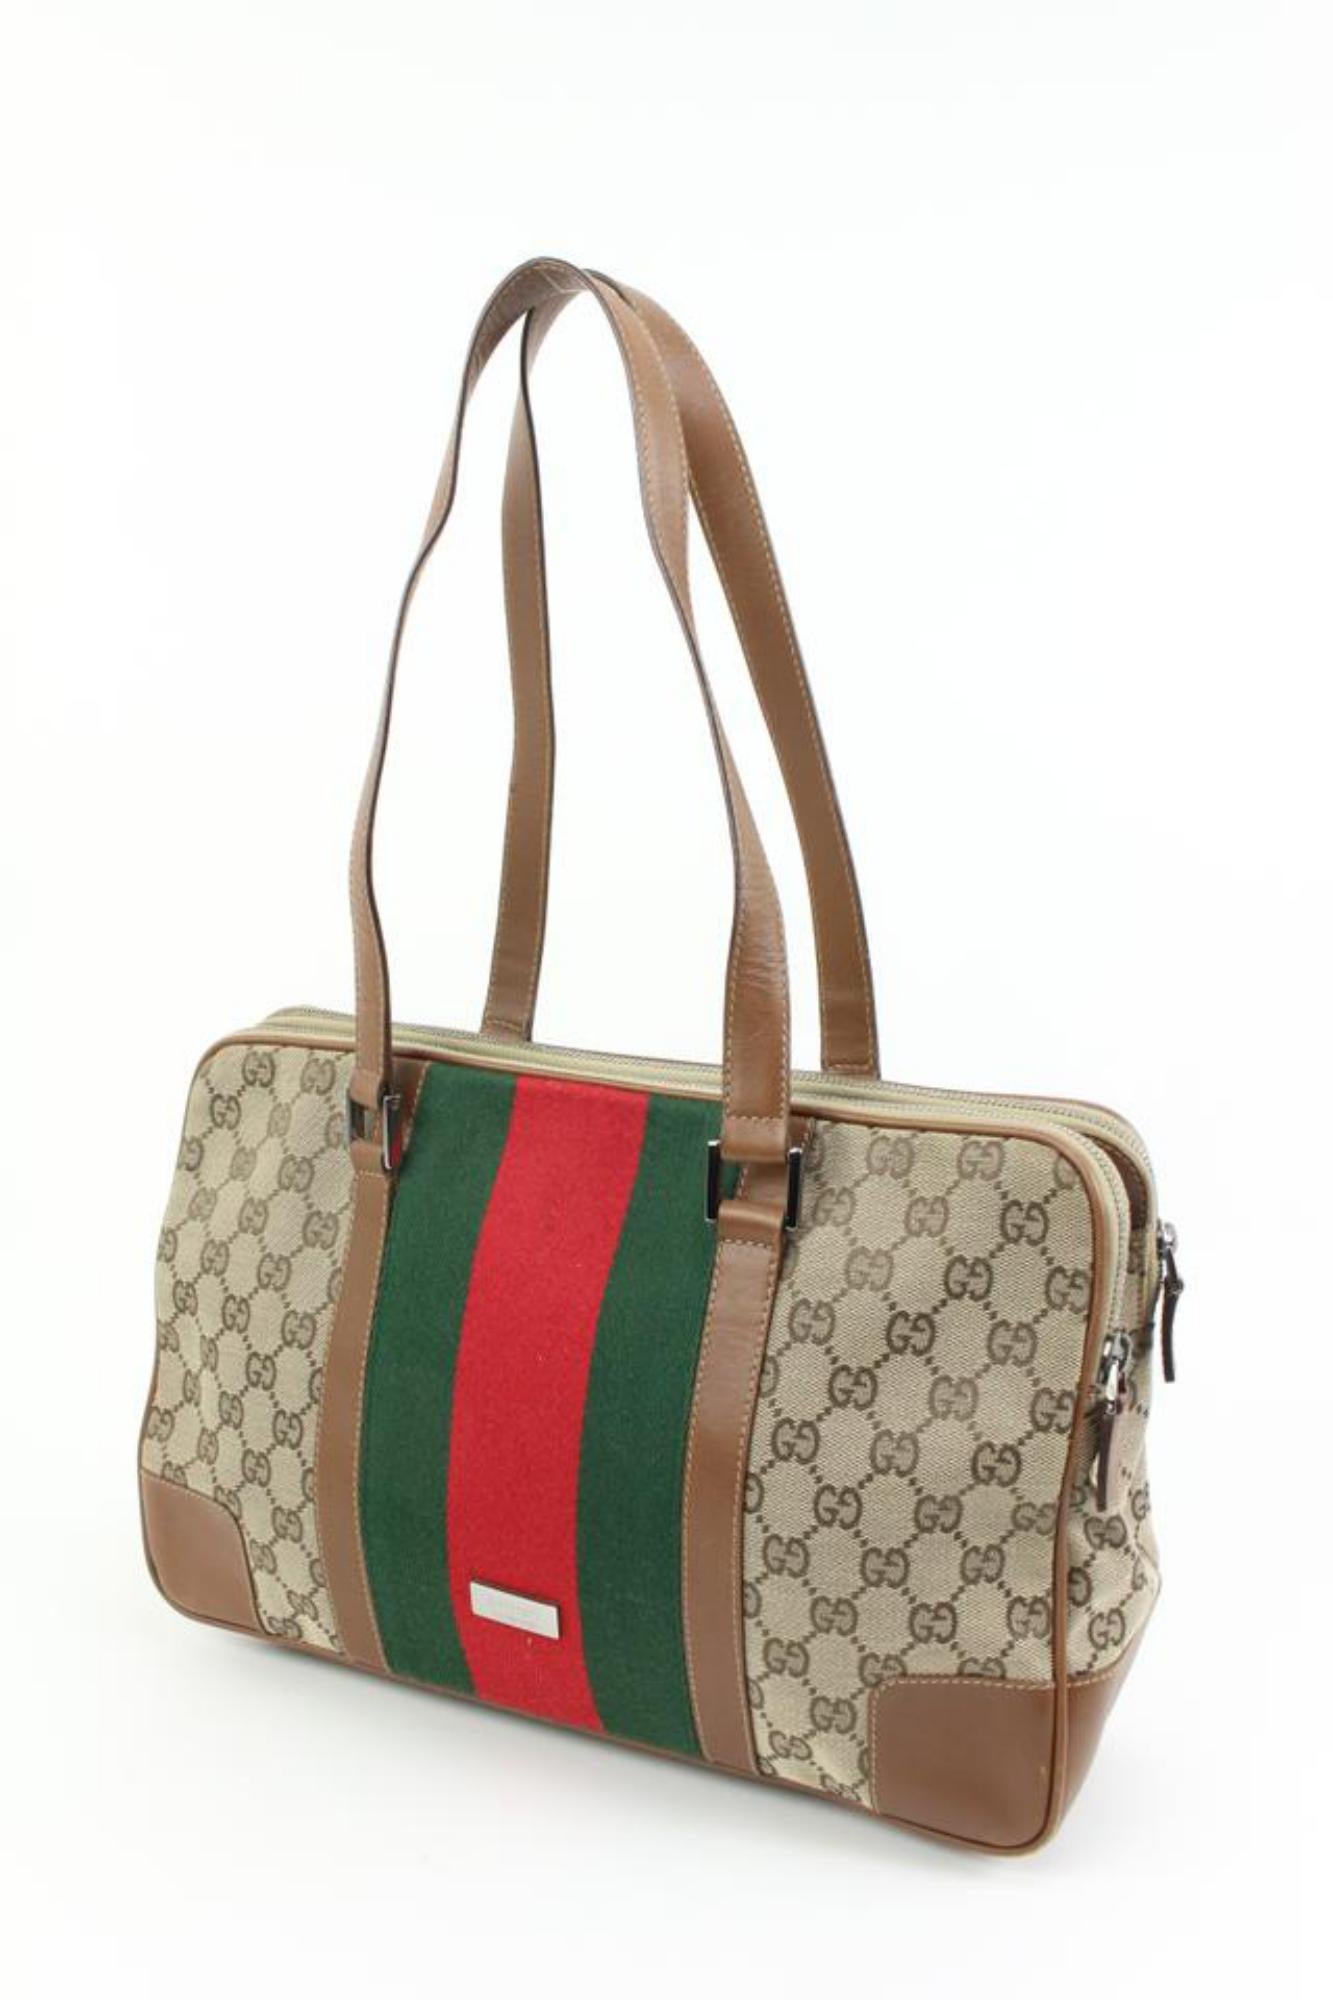 Gucci Monogram GG Web Shoulder Bowler Bag 5gz412s
Date Code/Serial Number: 
Made In: Italy
Measurements: Length:  14